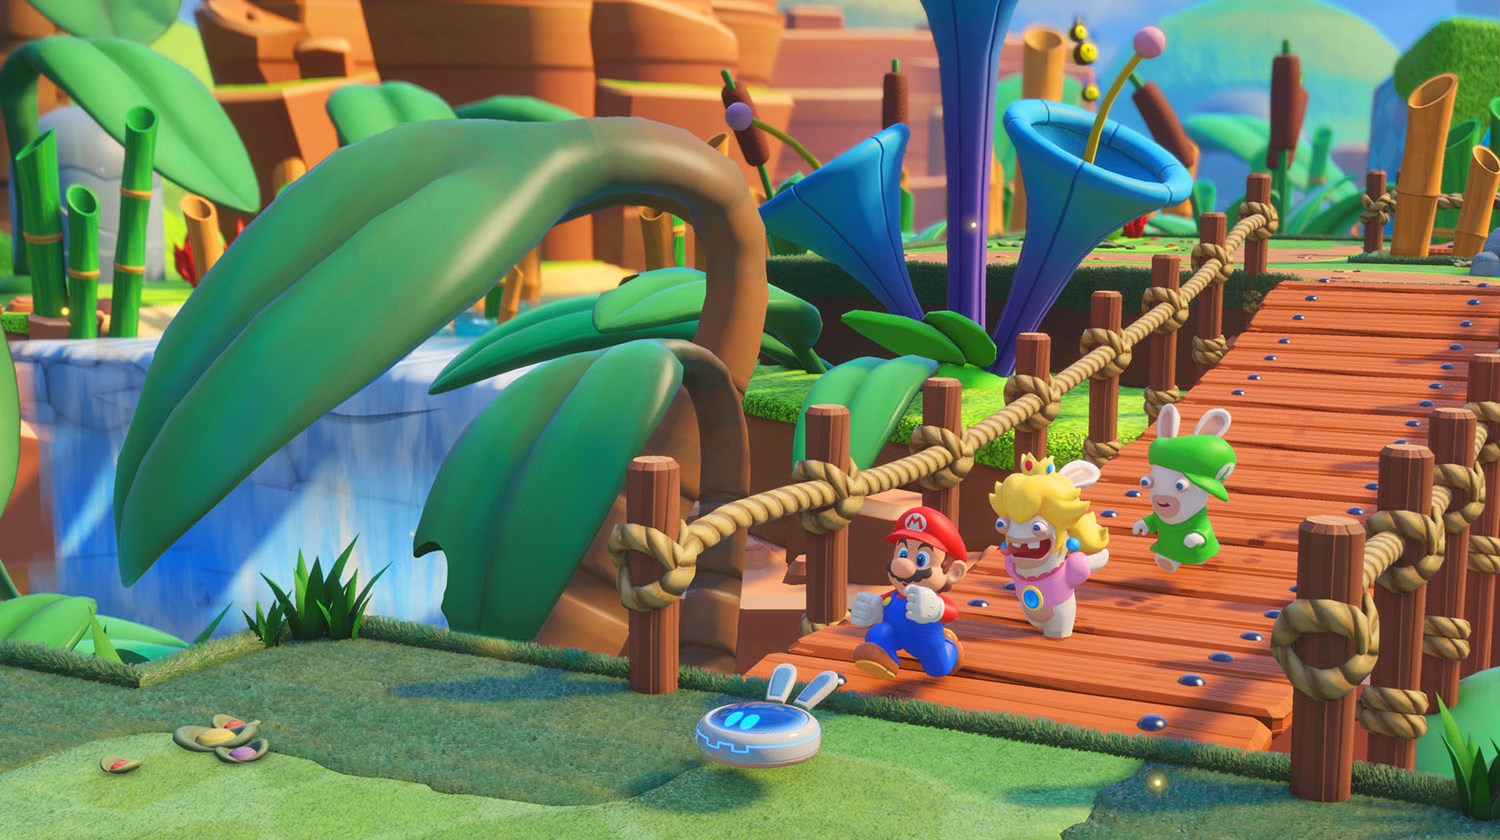 Mario + Rabbids Kingdom Battle - Nintendo Switch - image 3 of 6